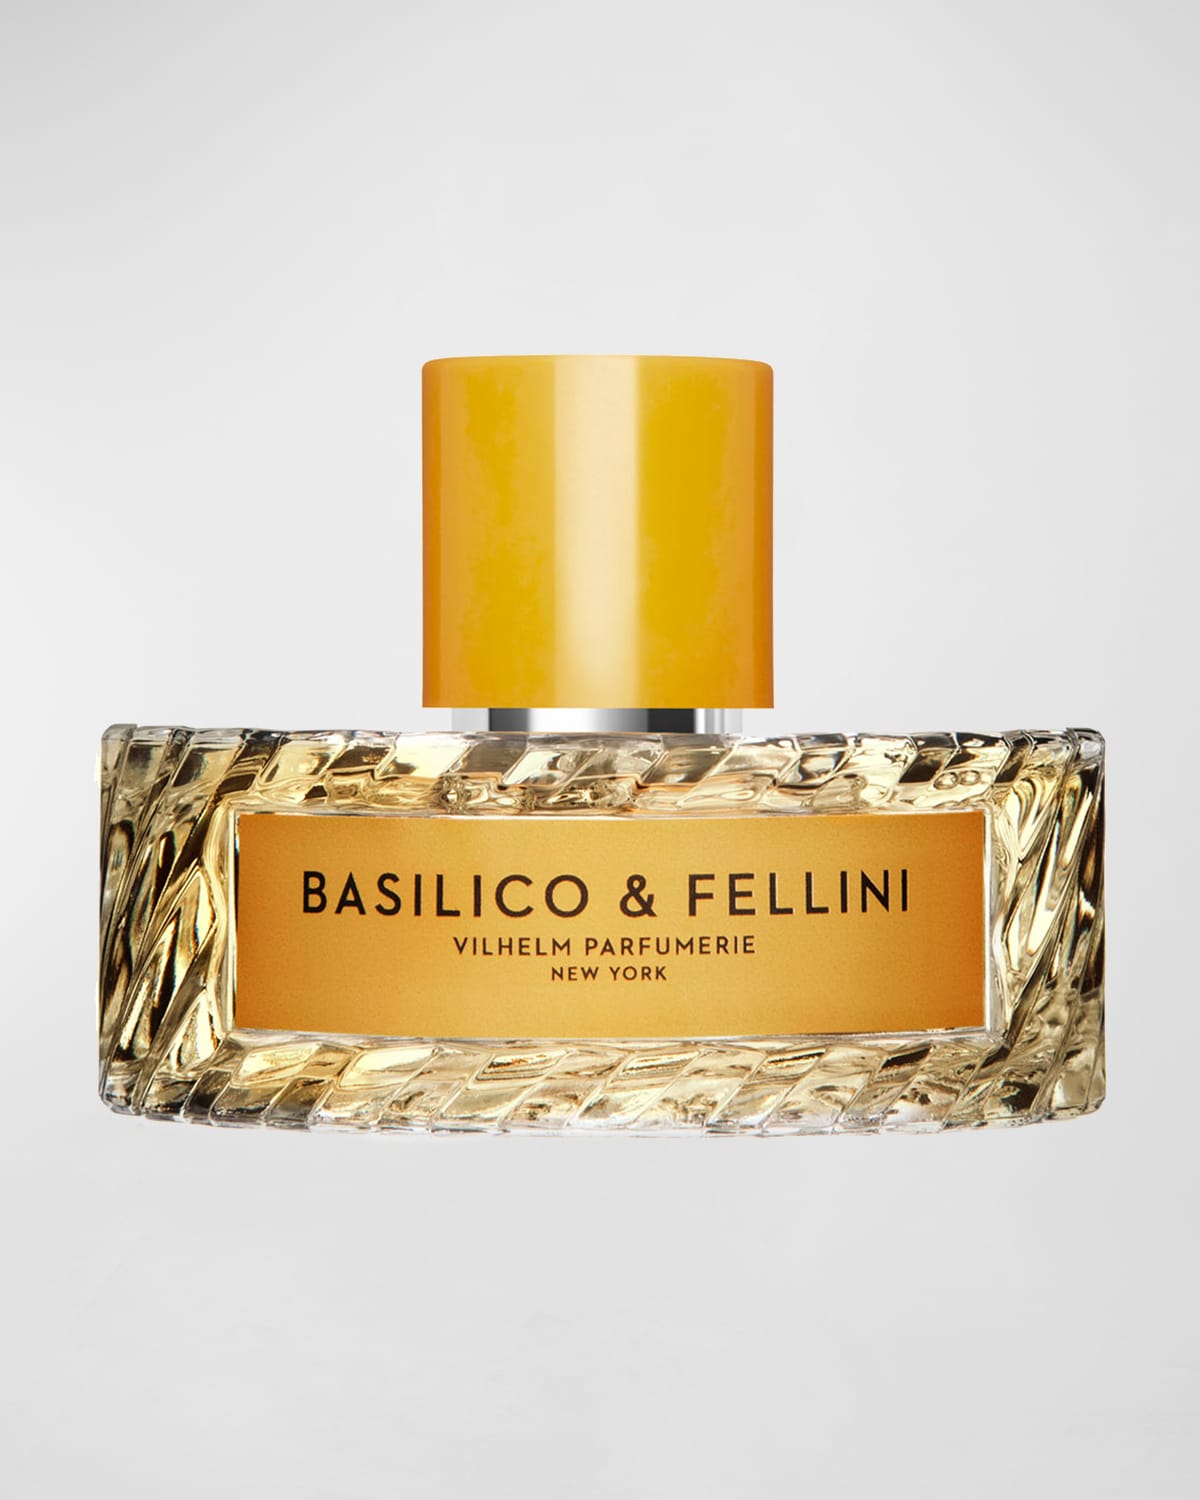 Basilico & Fellini Eau de Parfum, 3.3 oz.